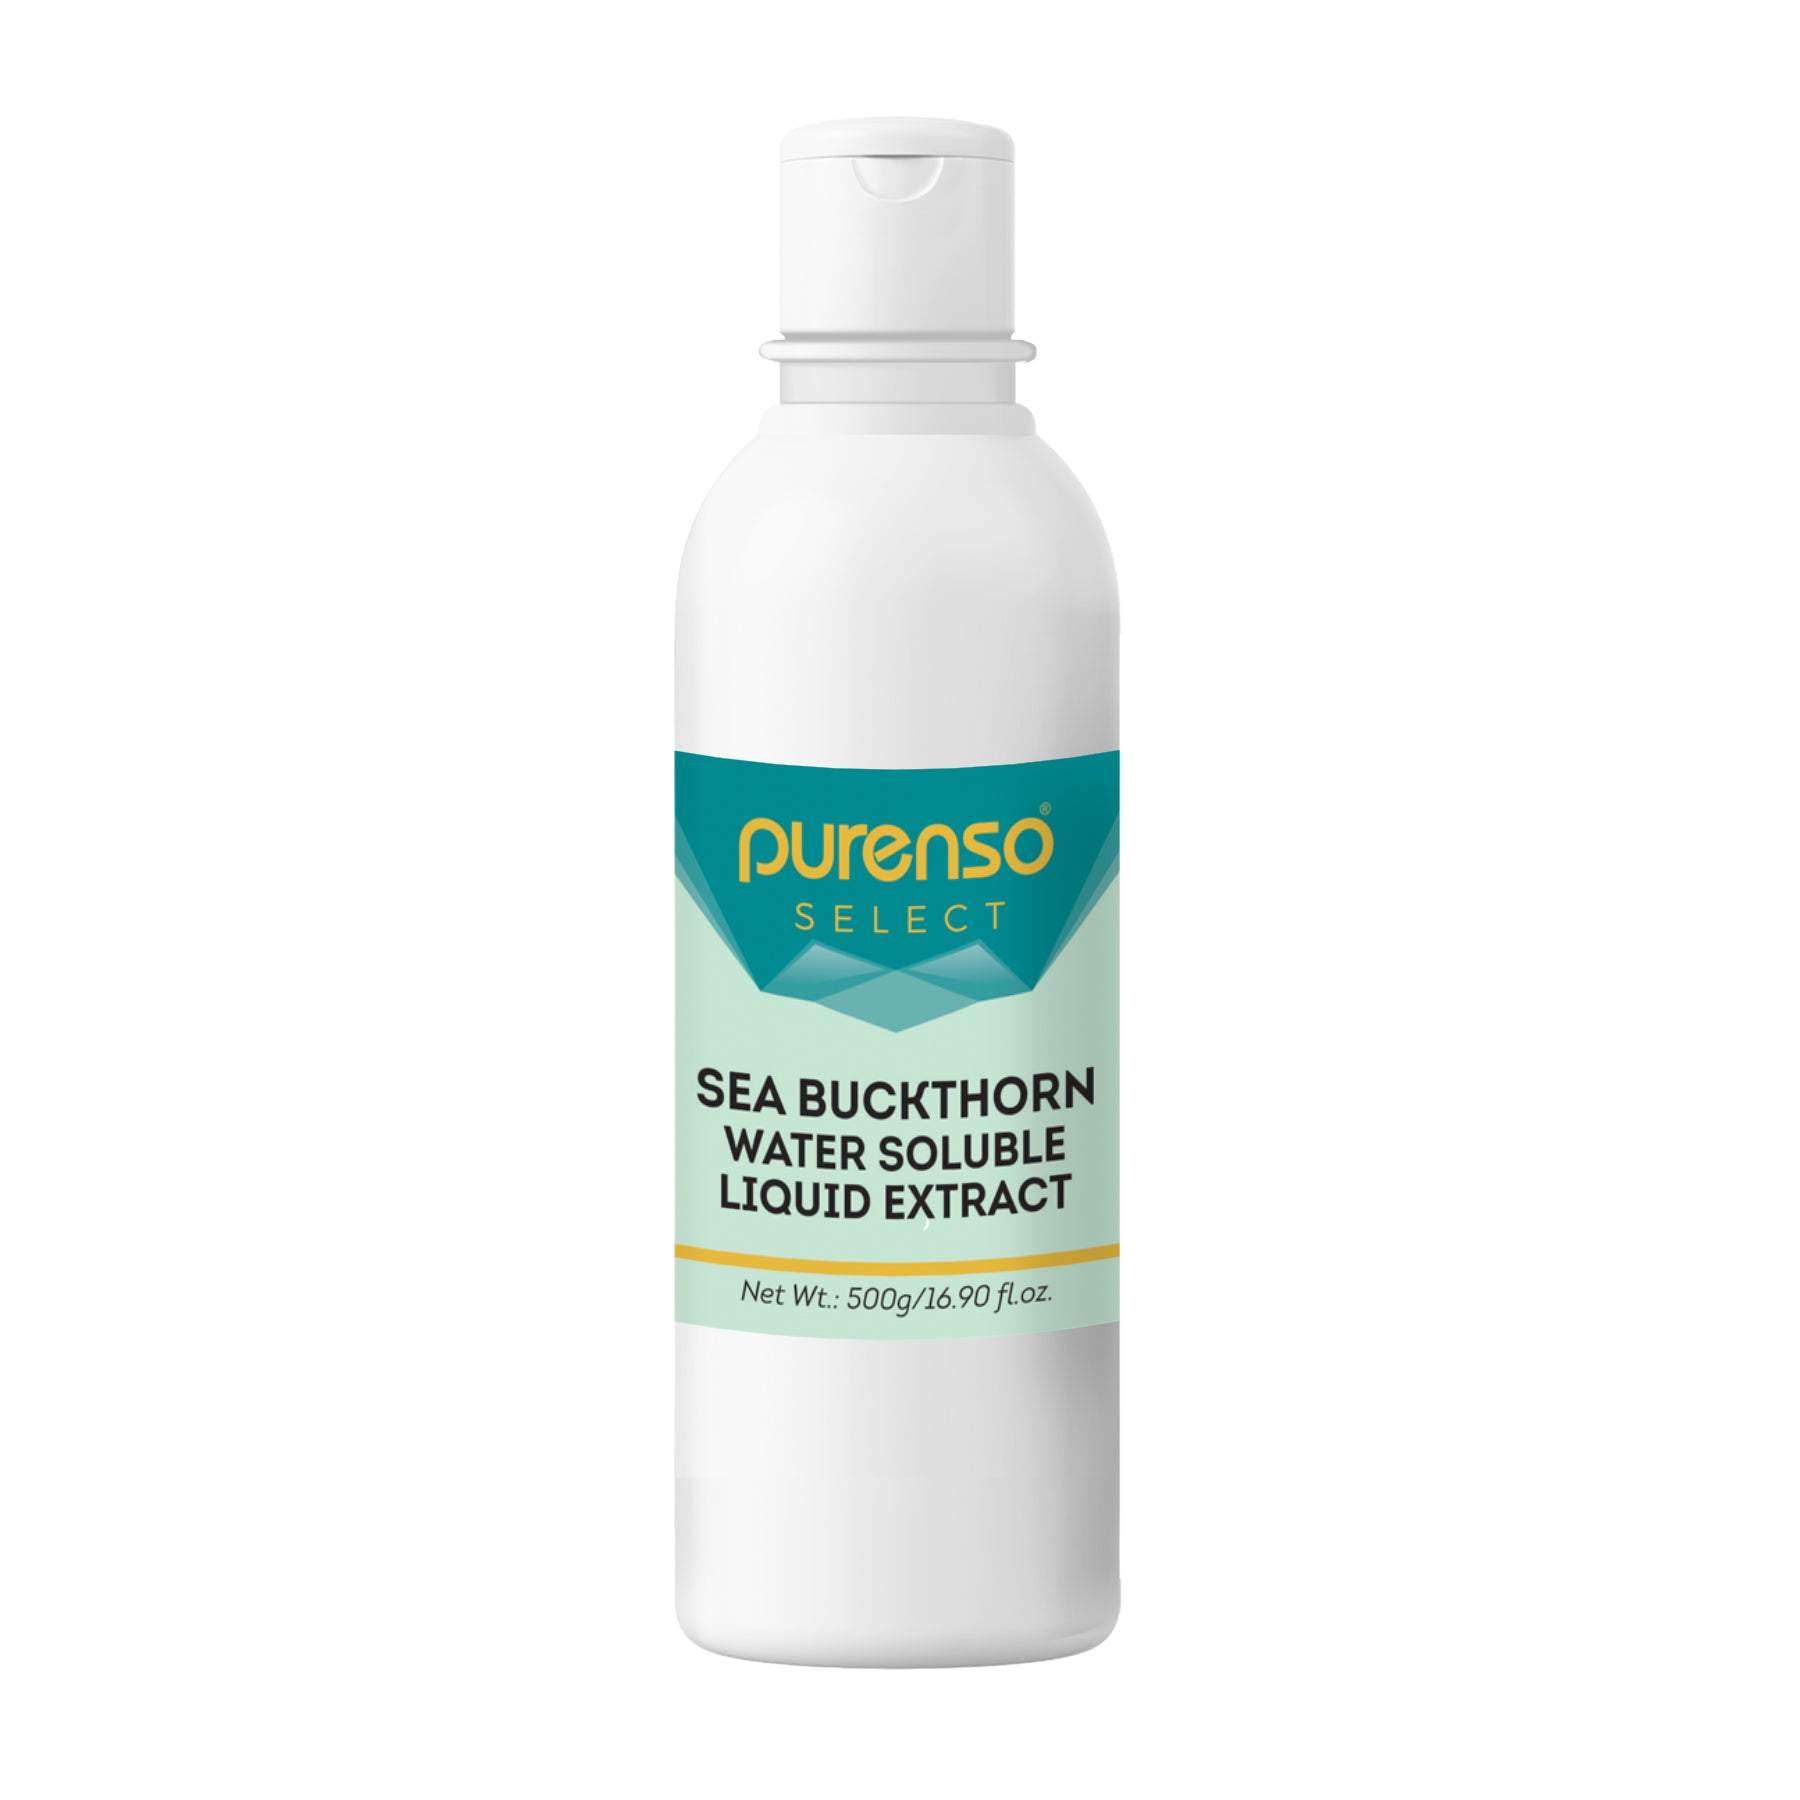 Sea buckthorn Liquid Extract - Water Soluble